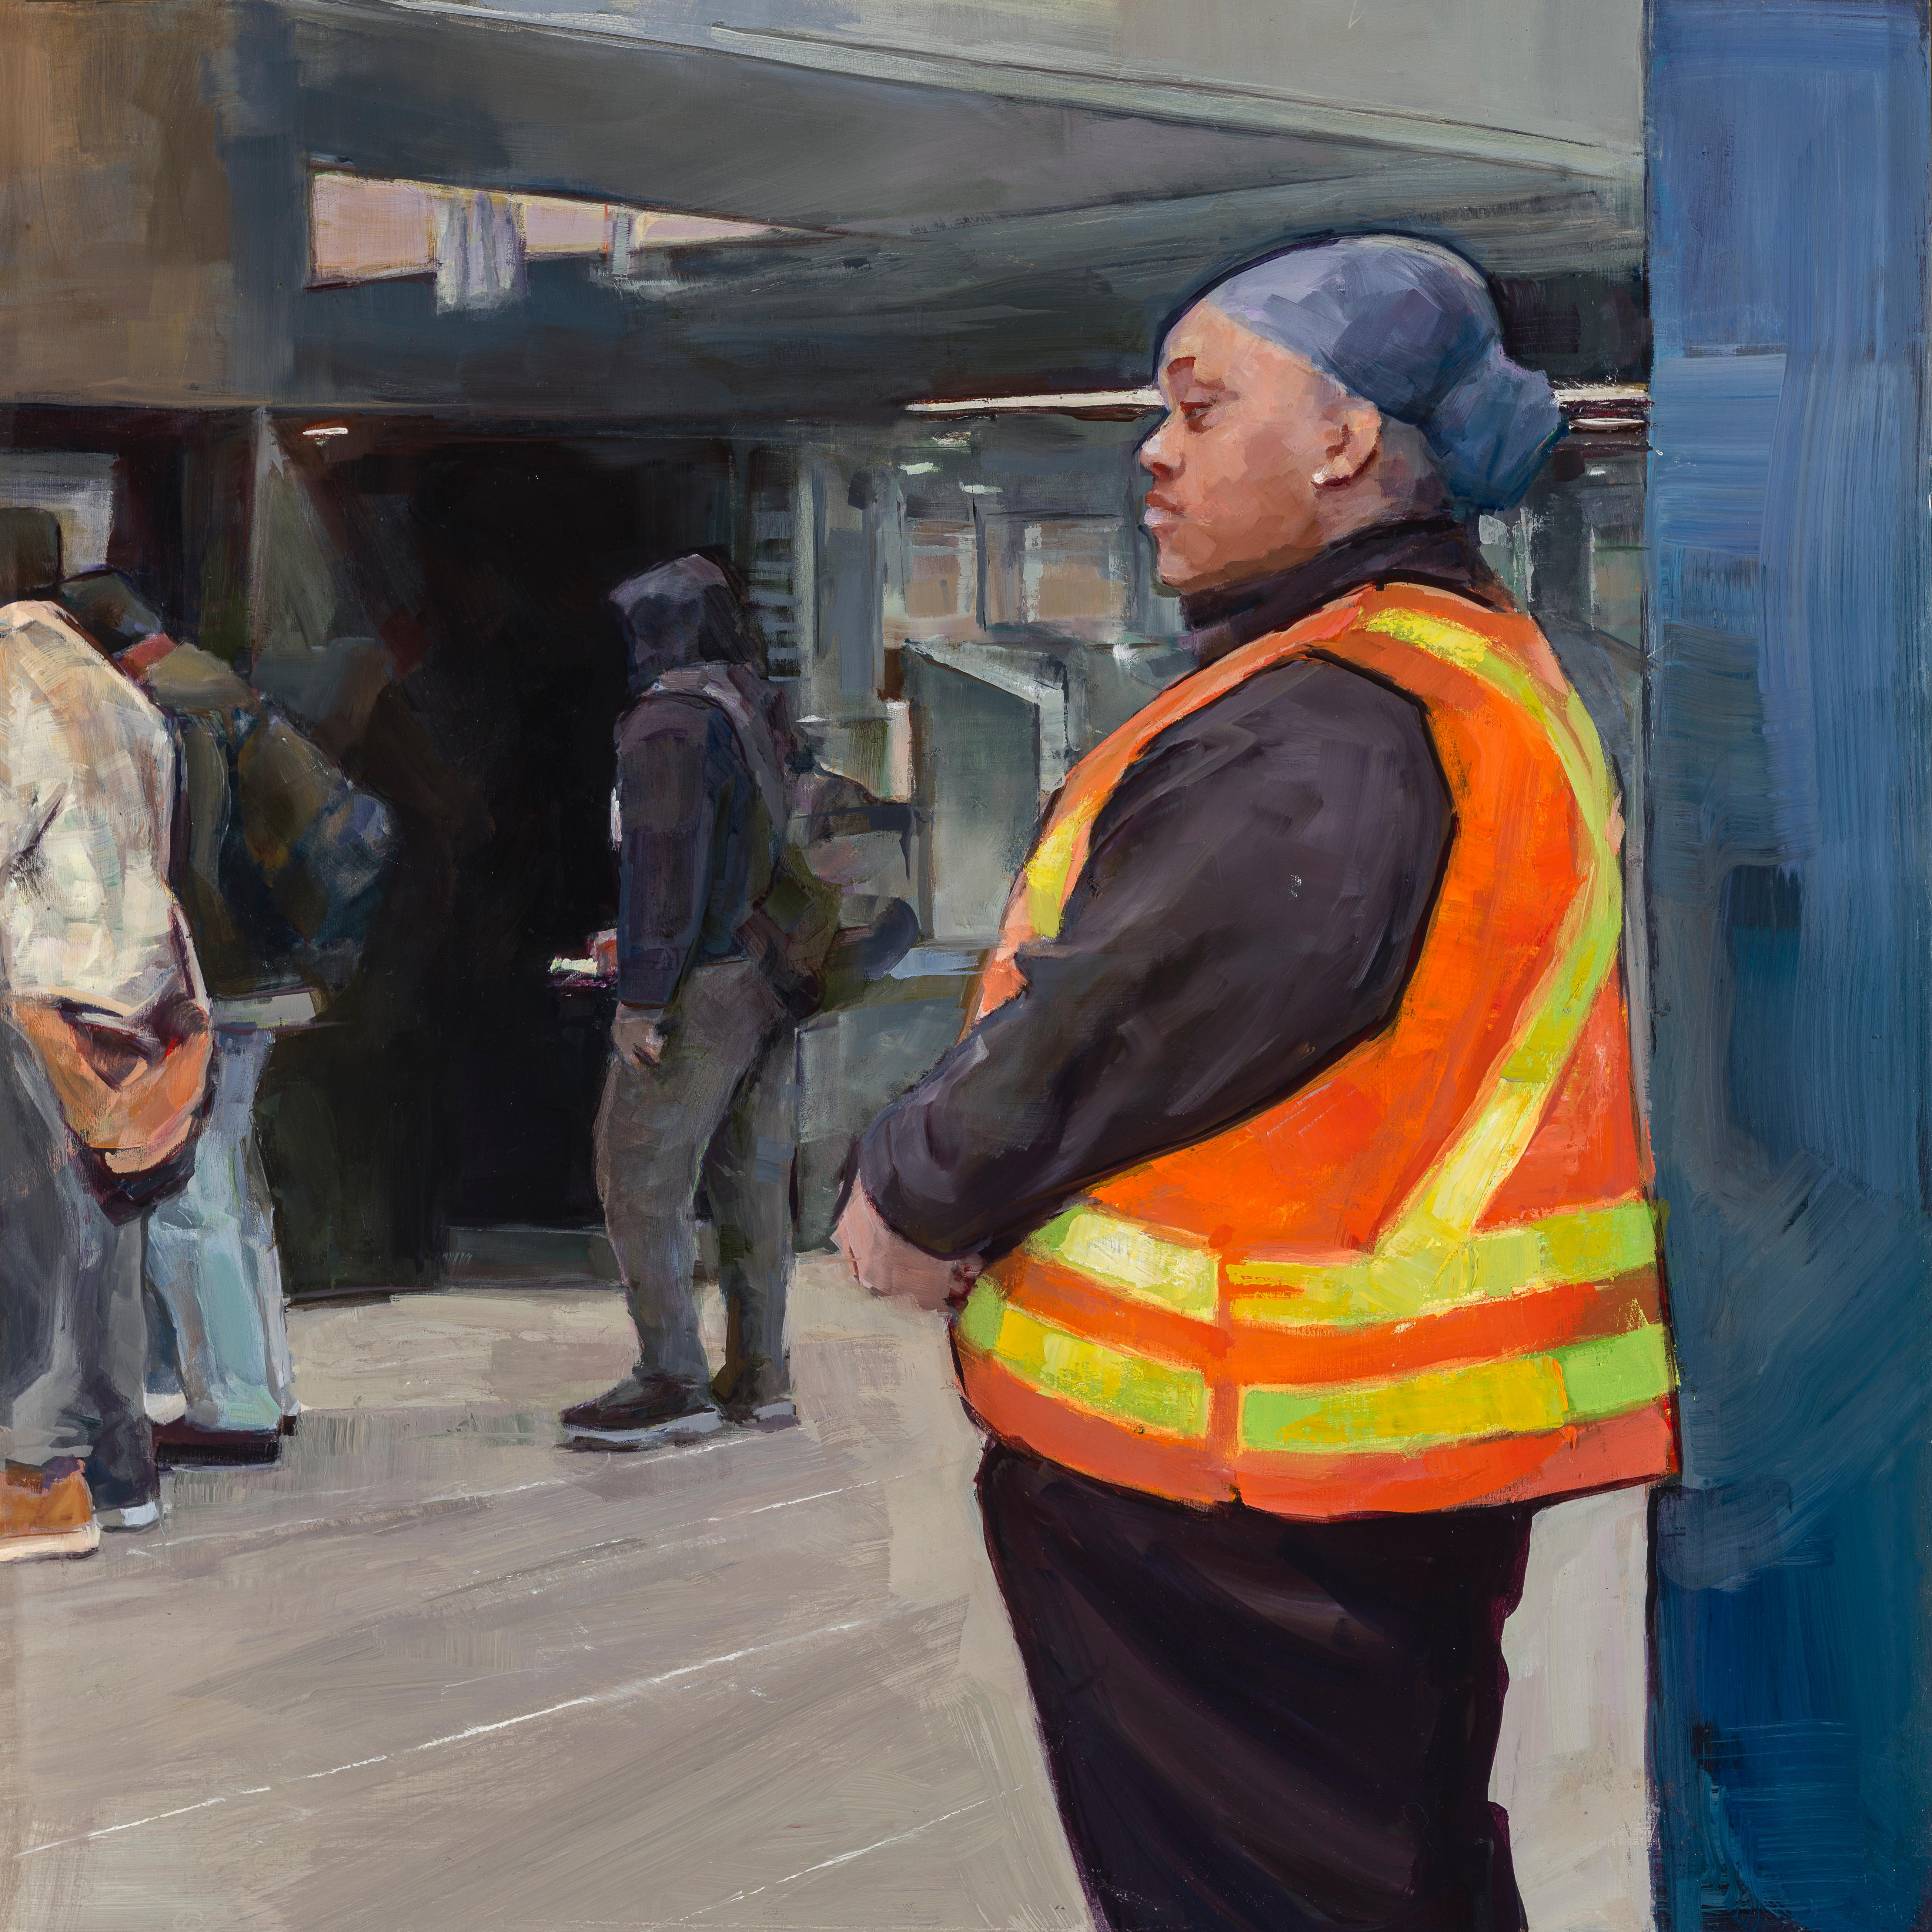 Worker in Orange Vest - Painting by Kathryn Maher